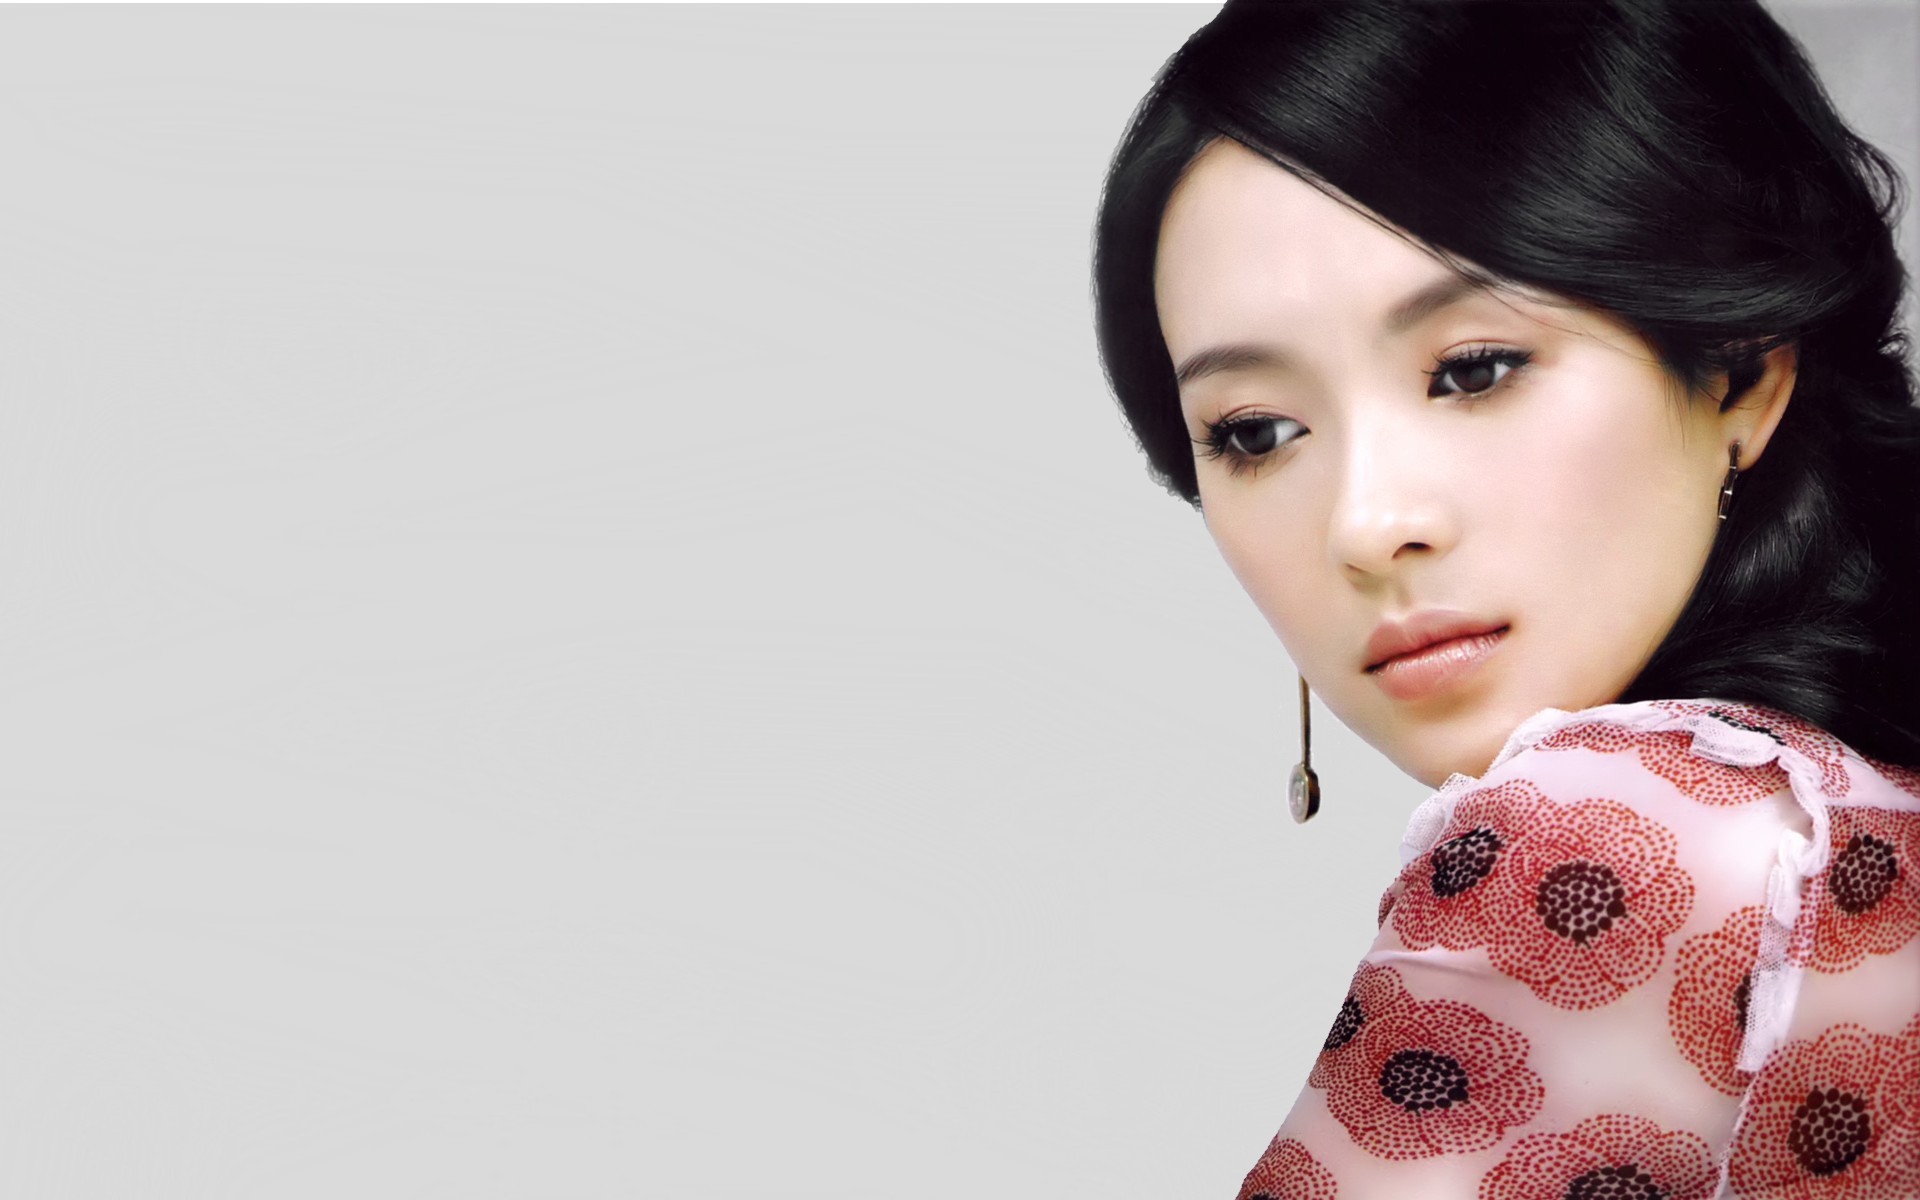 Картинки Zhang ziyi, брюнетка, актриса, фотосессия, макияж фото и обои на рабочий стол